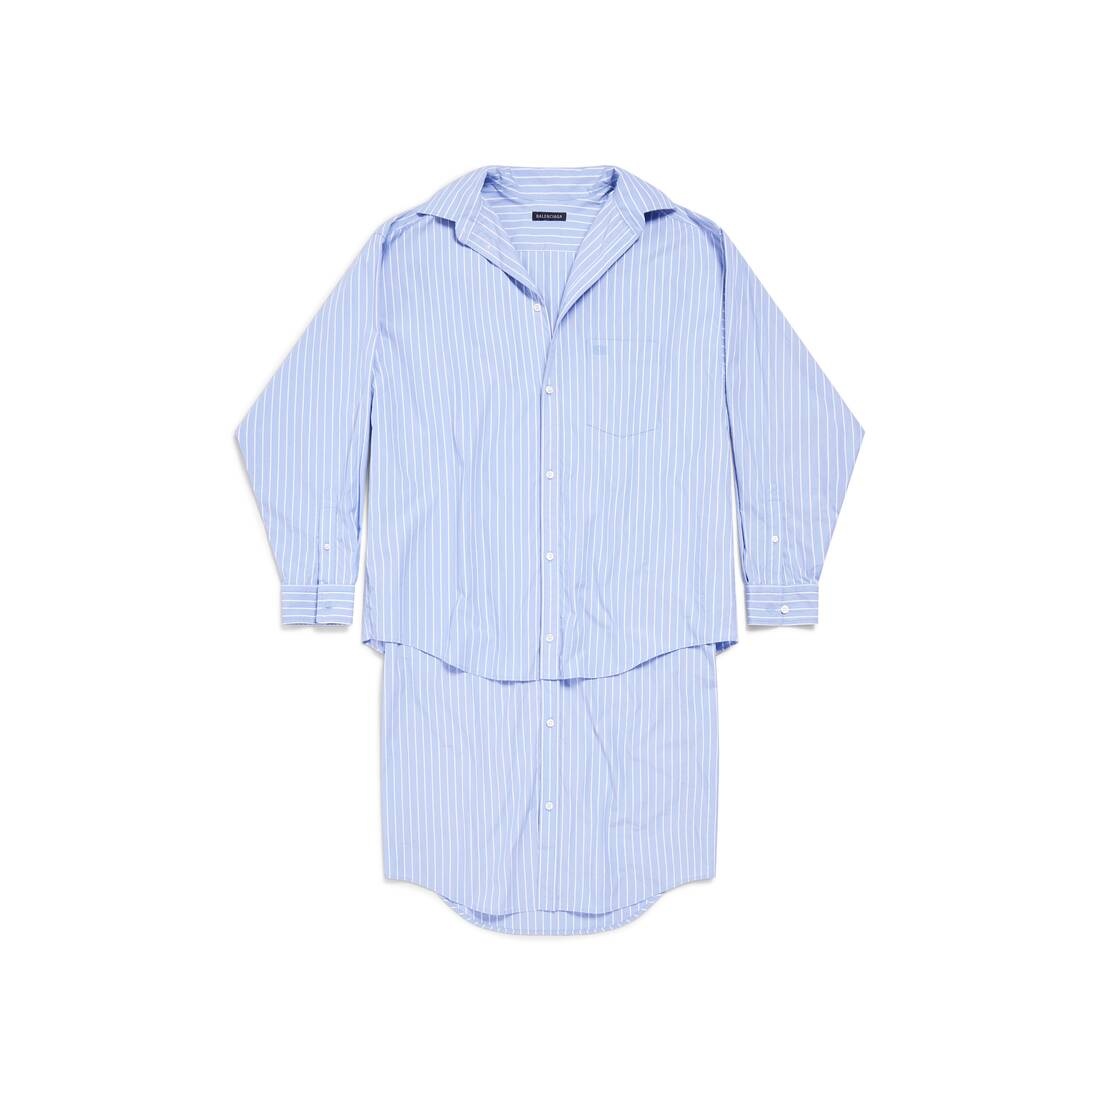 Women's Bb Classic Layered Shirt Dress in Light Blue/white - 1